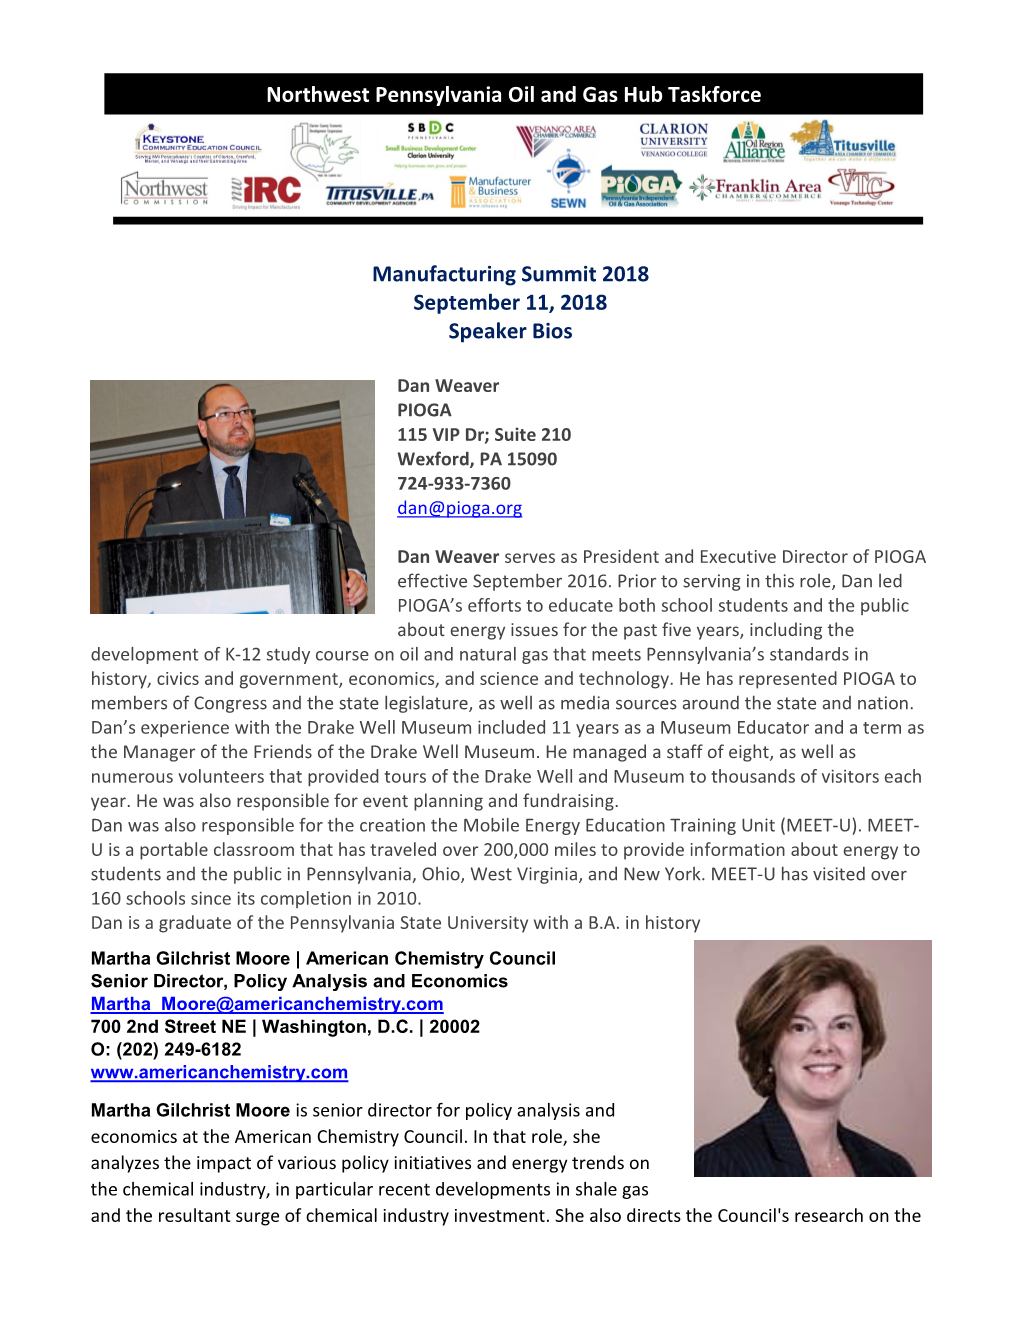 Manufacturing Summit 2018 September 11, 2018 Speaker Bios Northwest Pennsylvania Oil and Gas Hub Taskforce